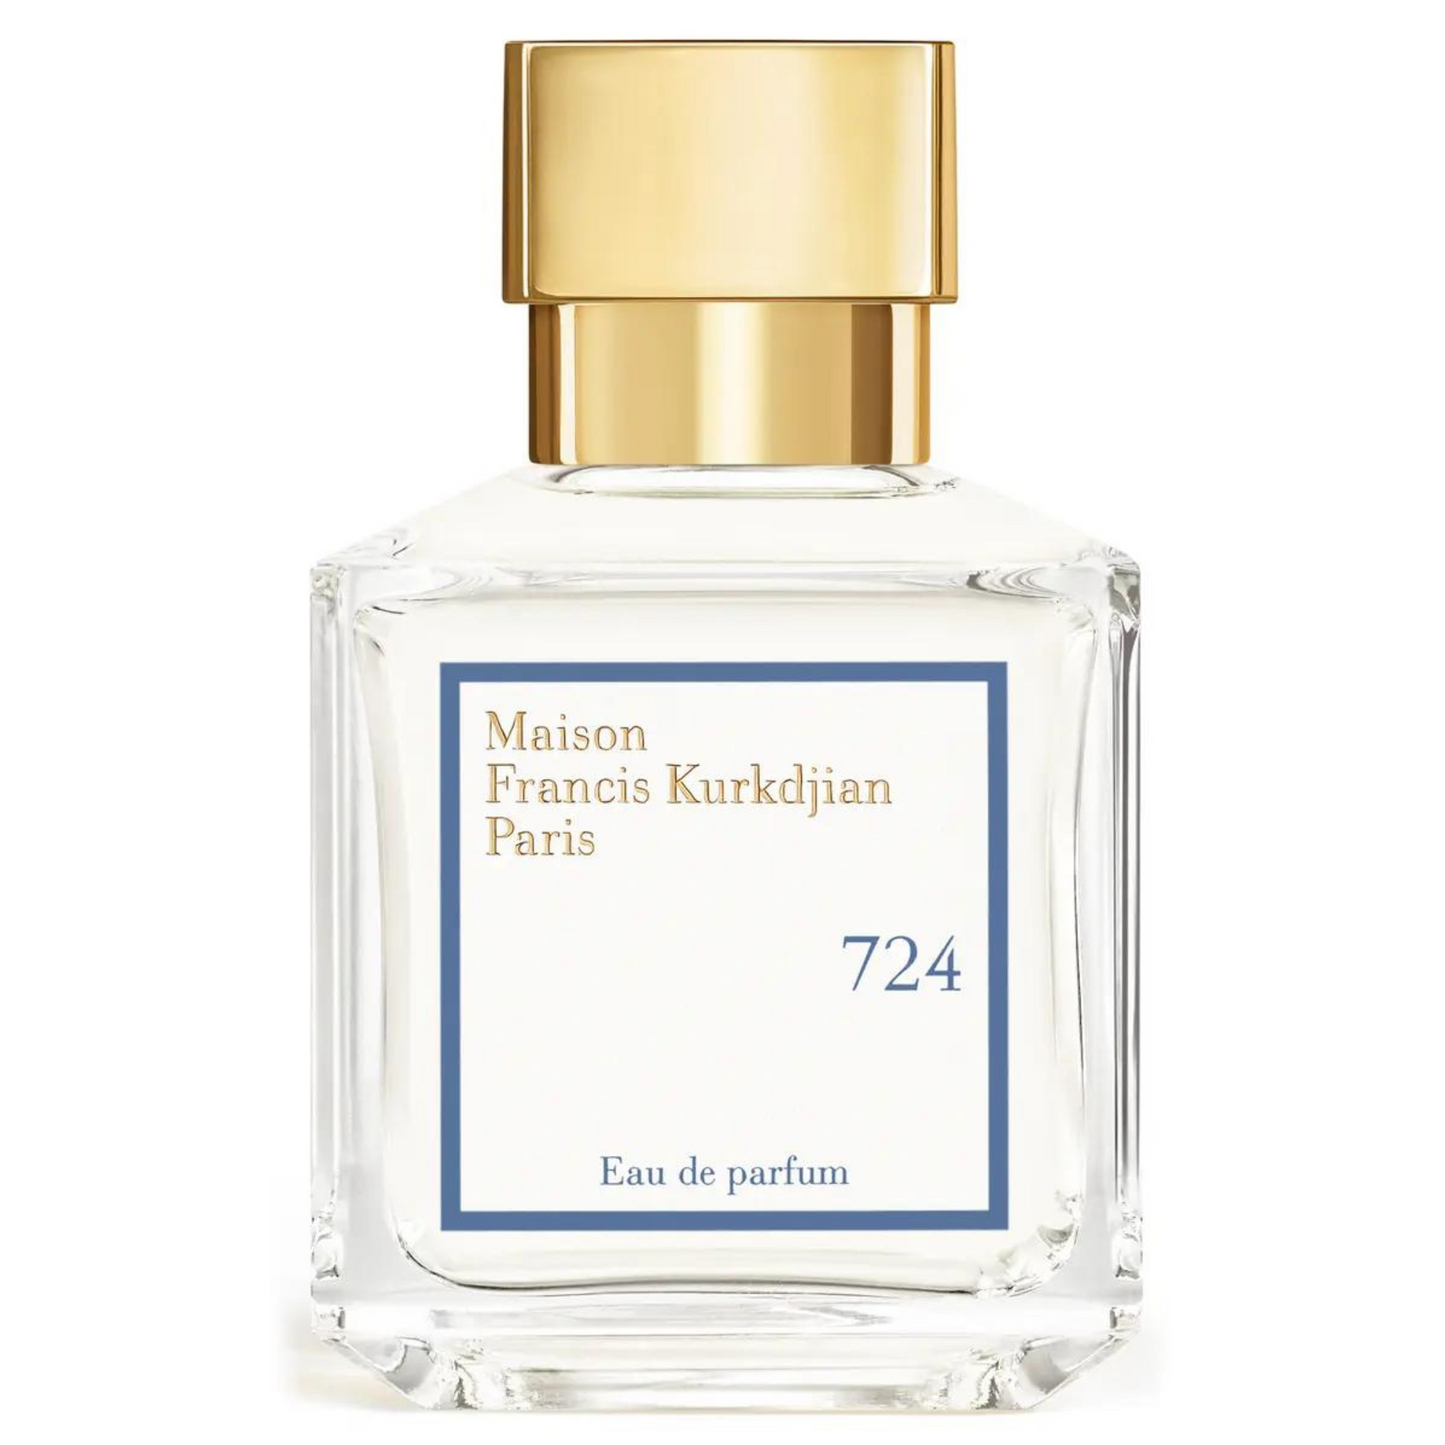 Maison Francis Kurkdjian Paris 724 Eau De Parfum (75 ml) Smallflower